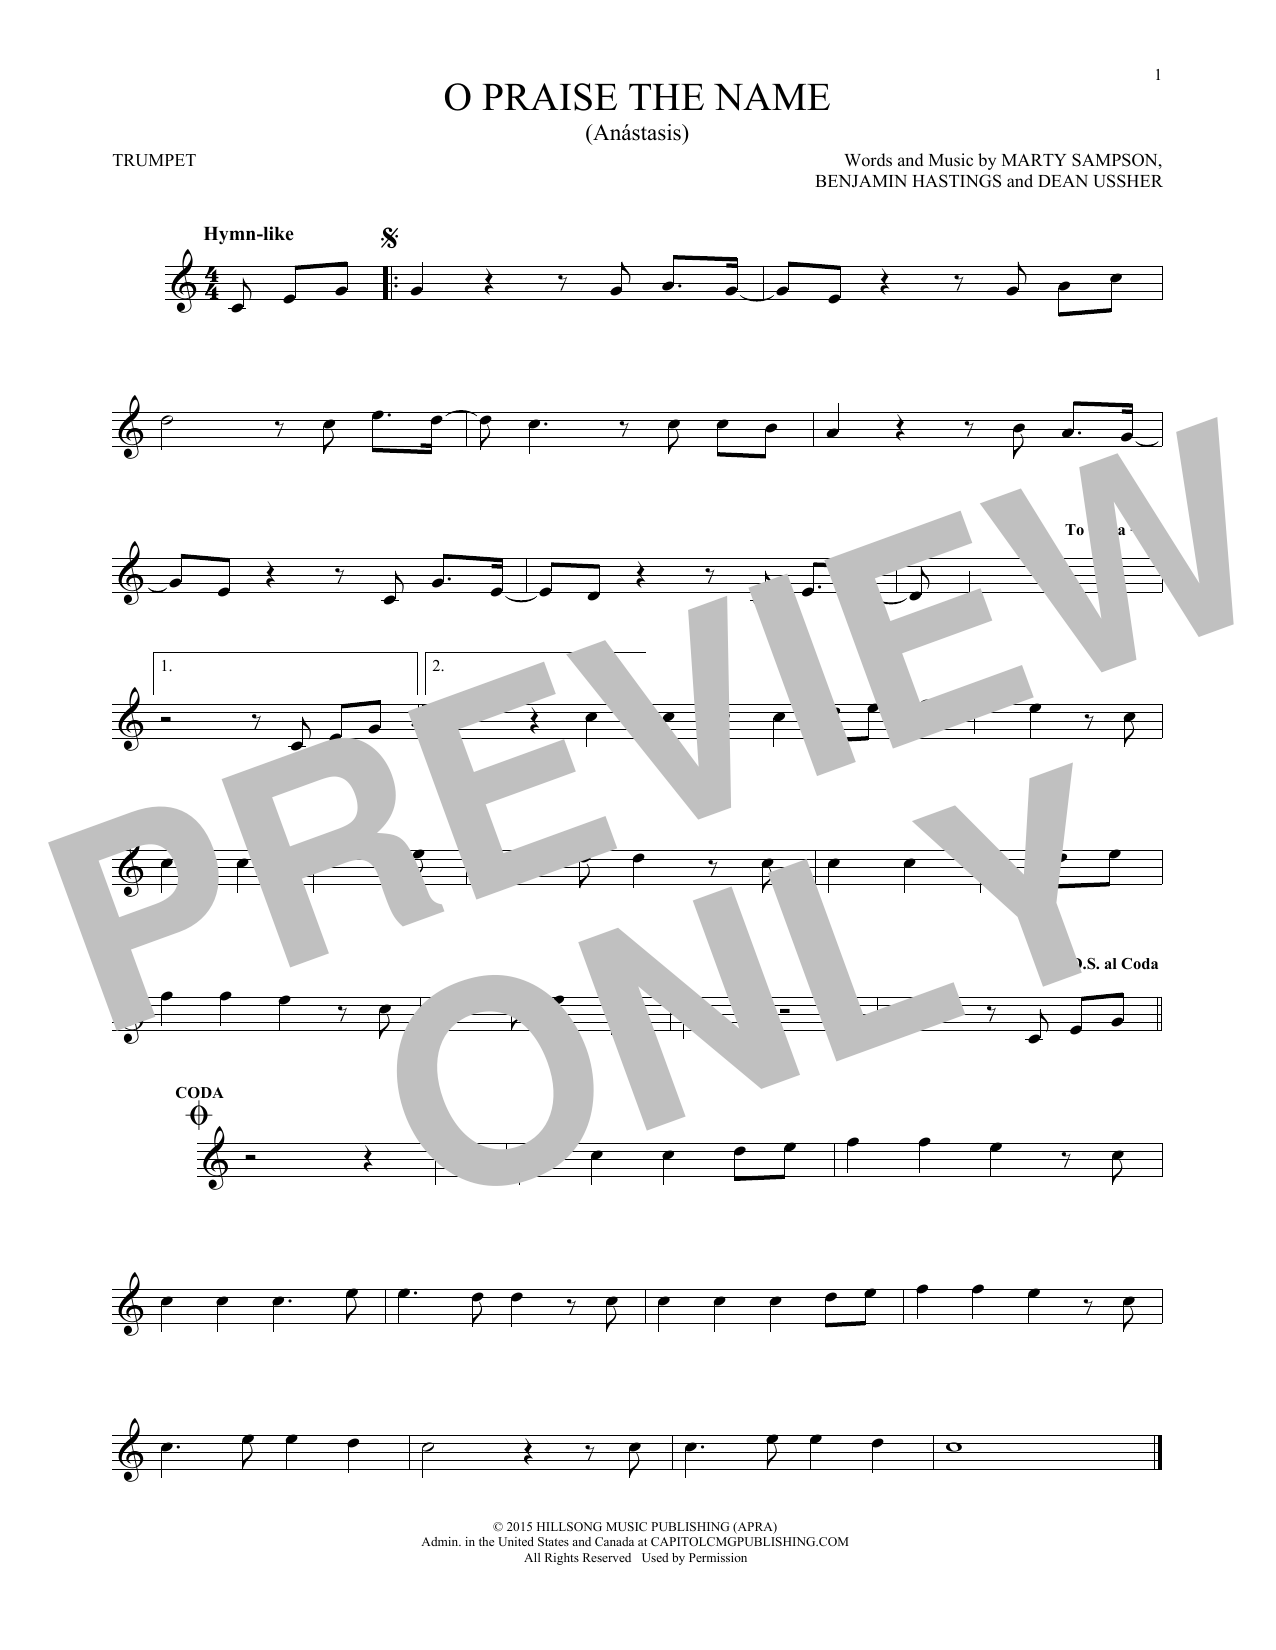 Hillsong Worship O Praise The Name (Anastasis) Sheet Music Notes & Chords for Alto Sax Solo - Download or Print PDF